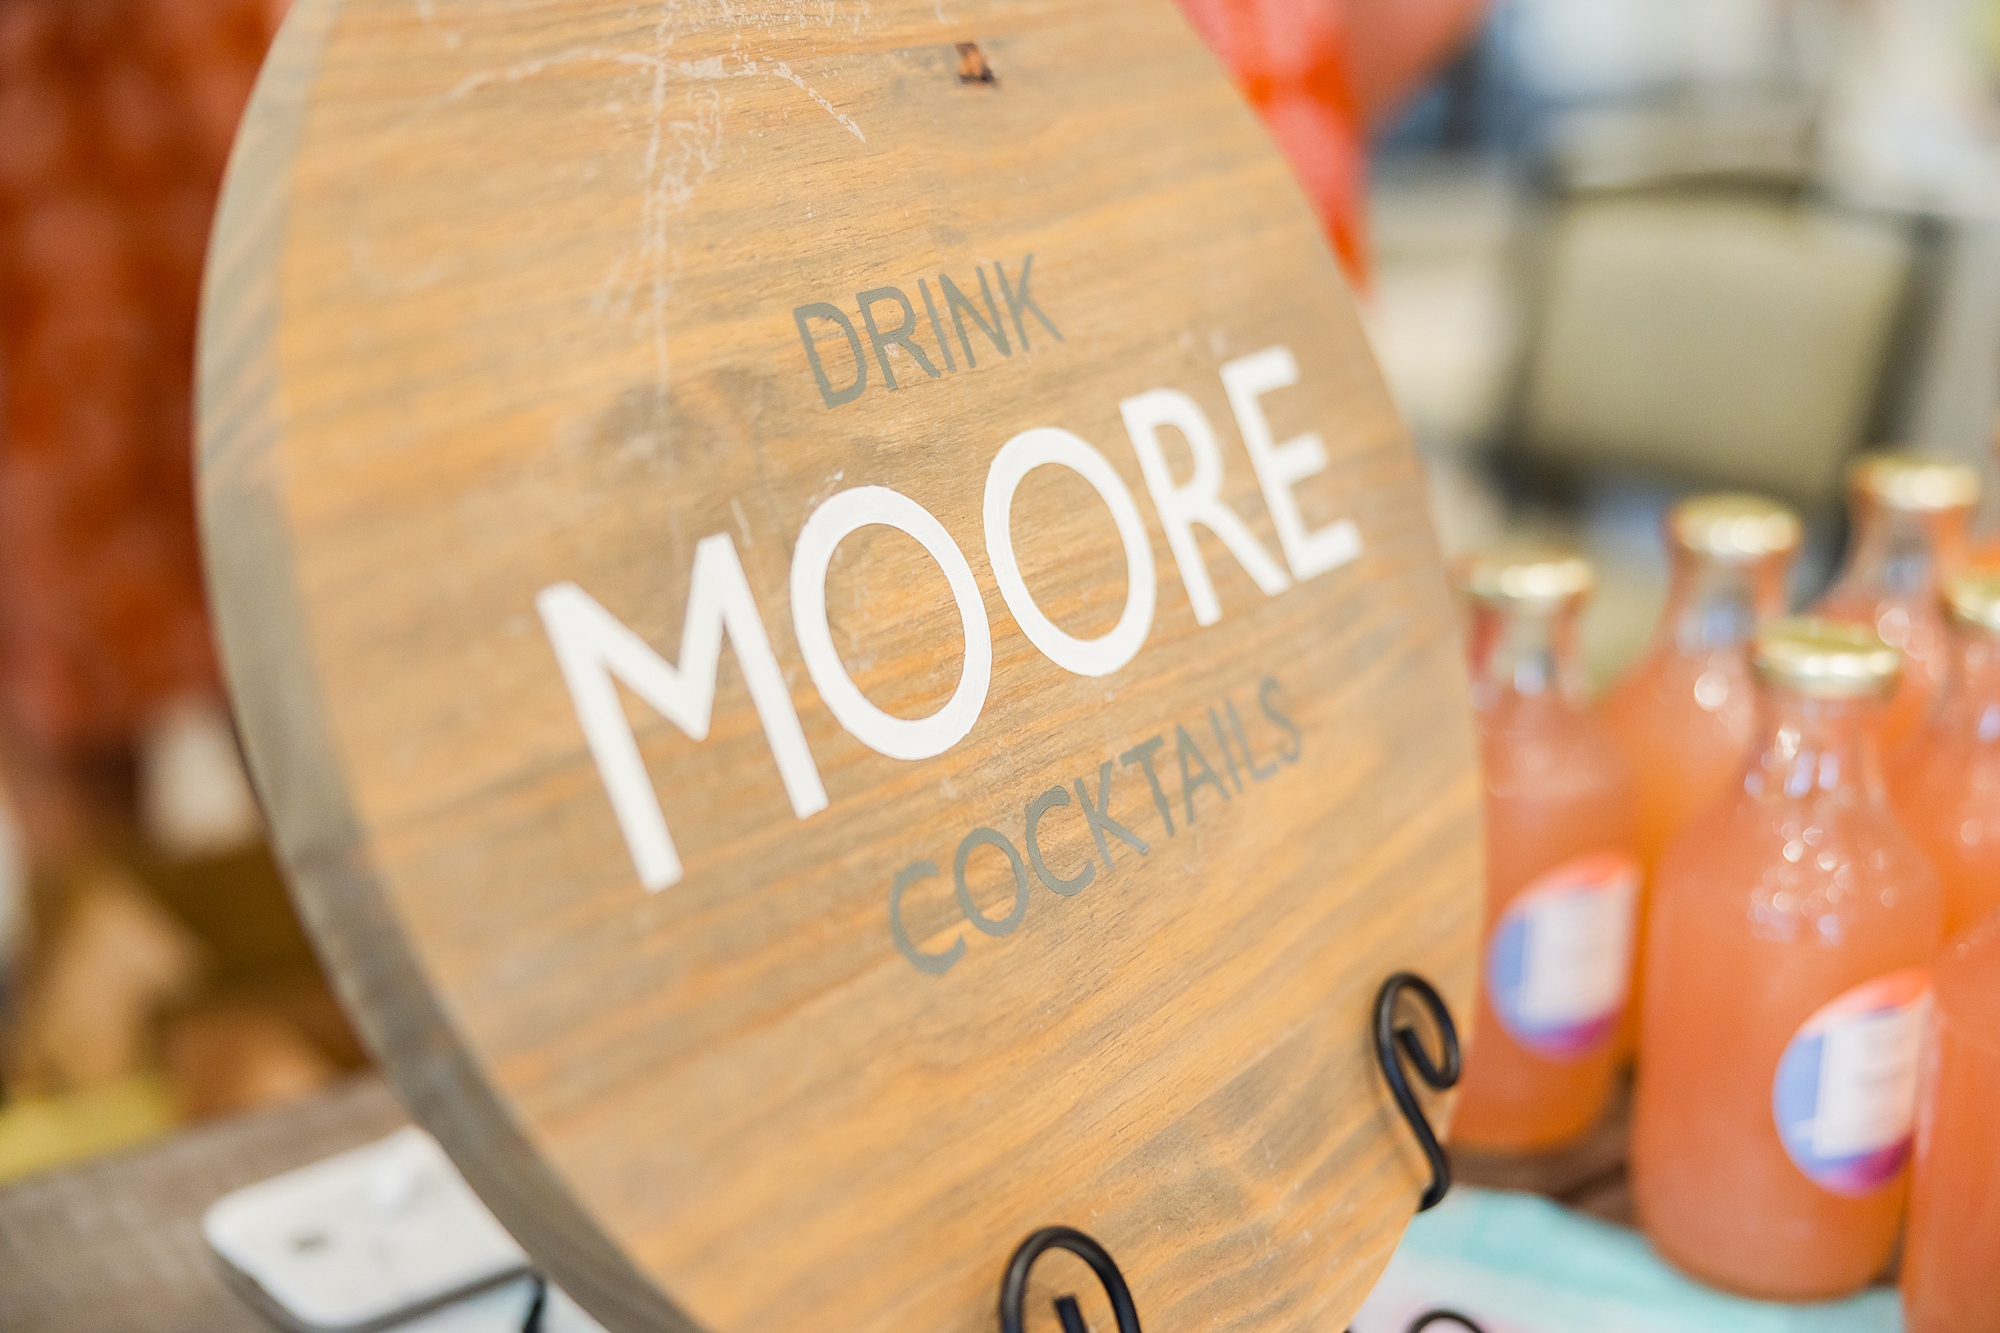 Drink Moore Cocktails sign